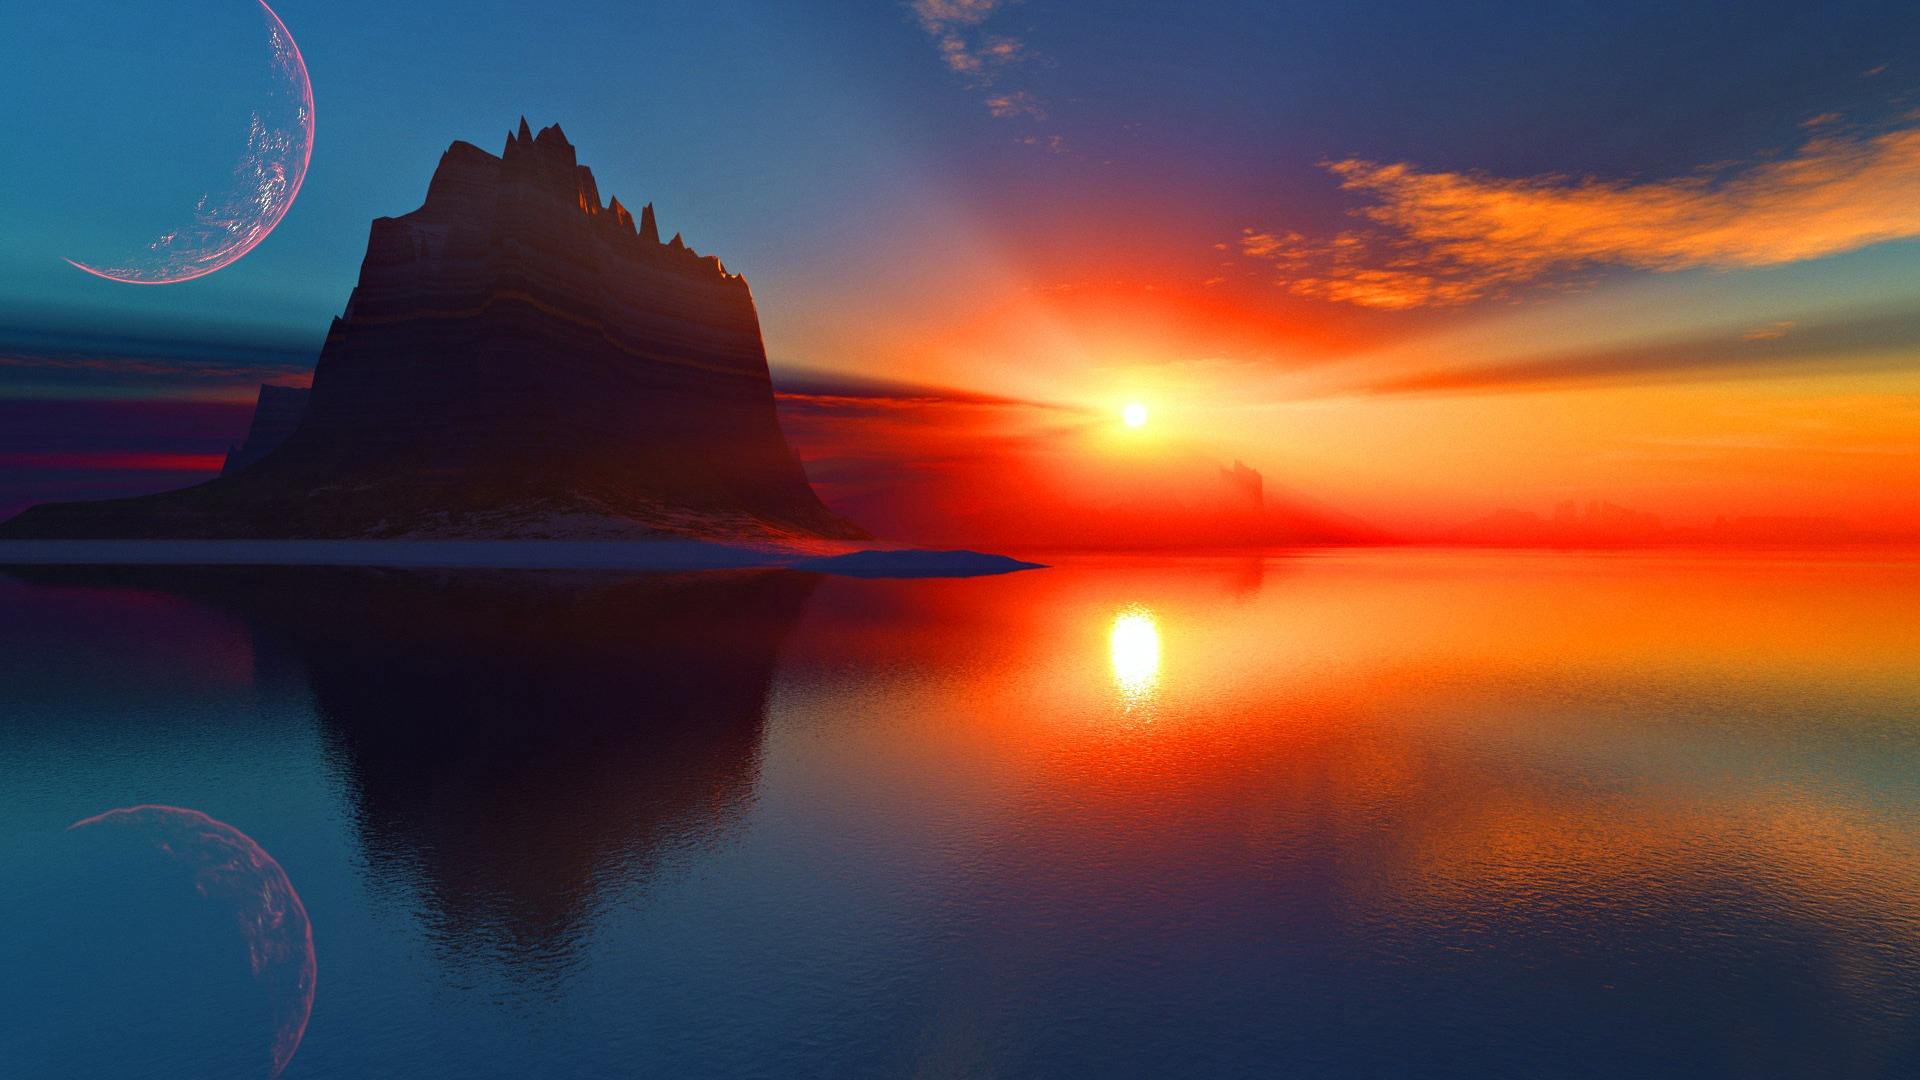 Unreal Sunset Reflection Wallpaper Jpeg Image